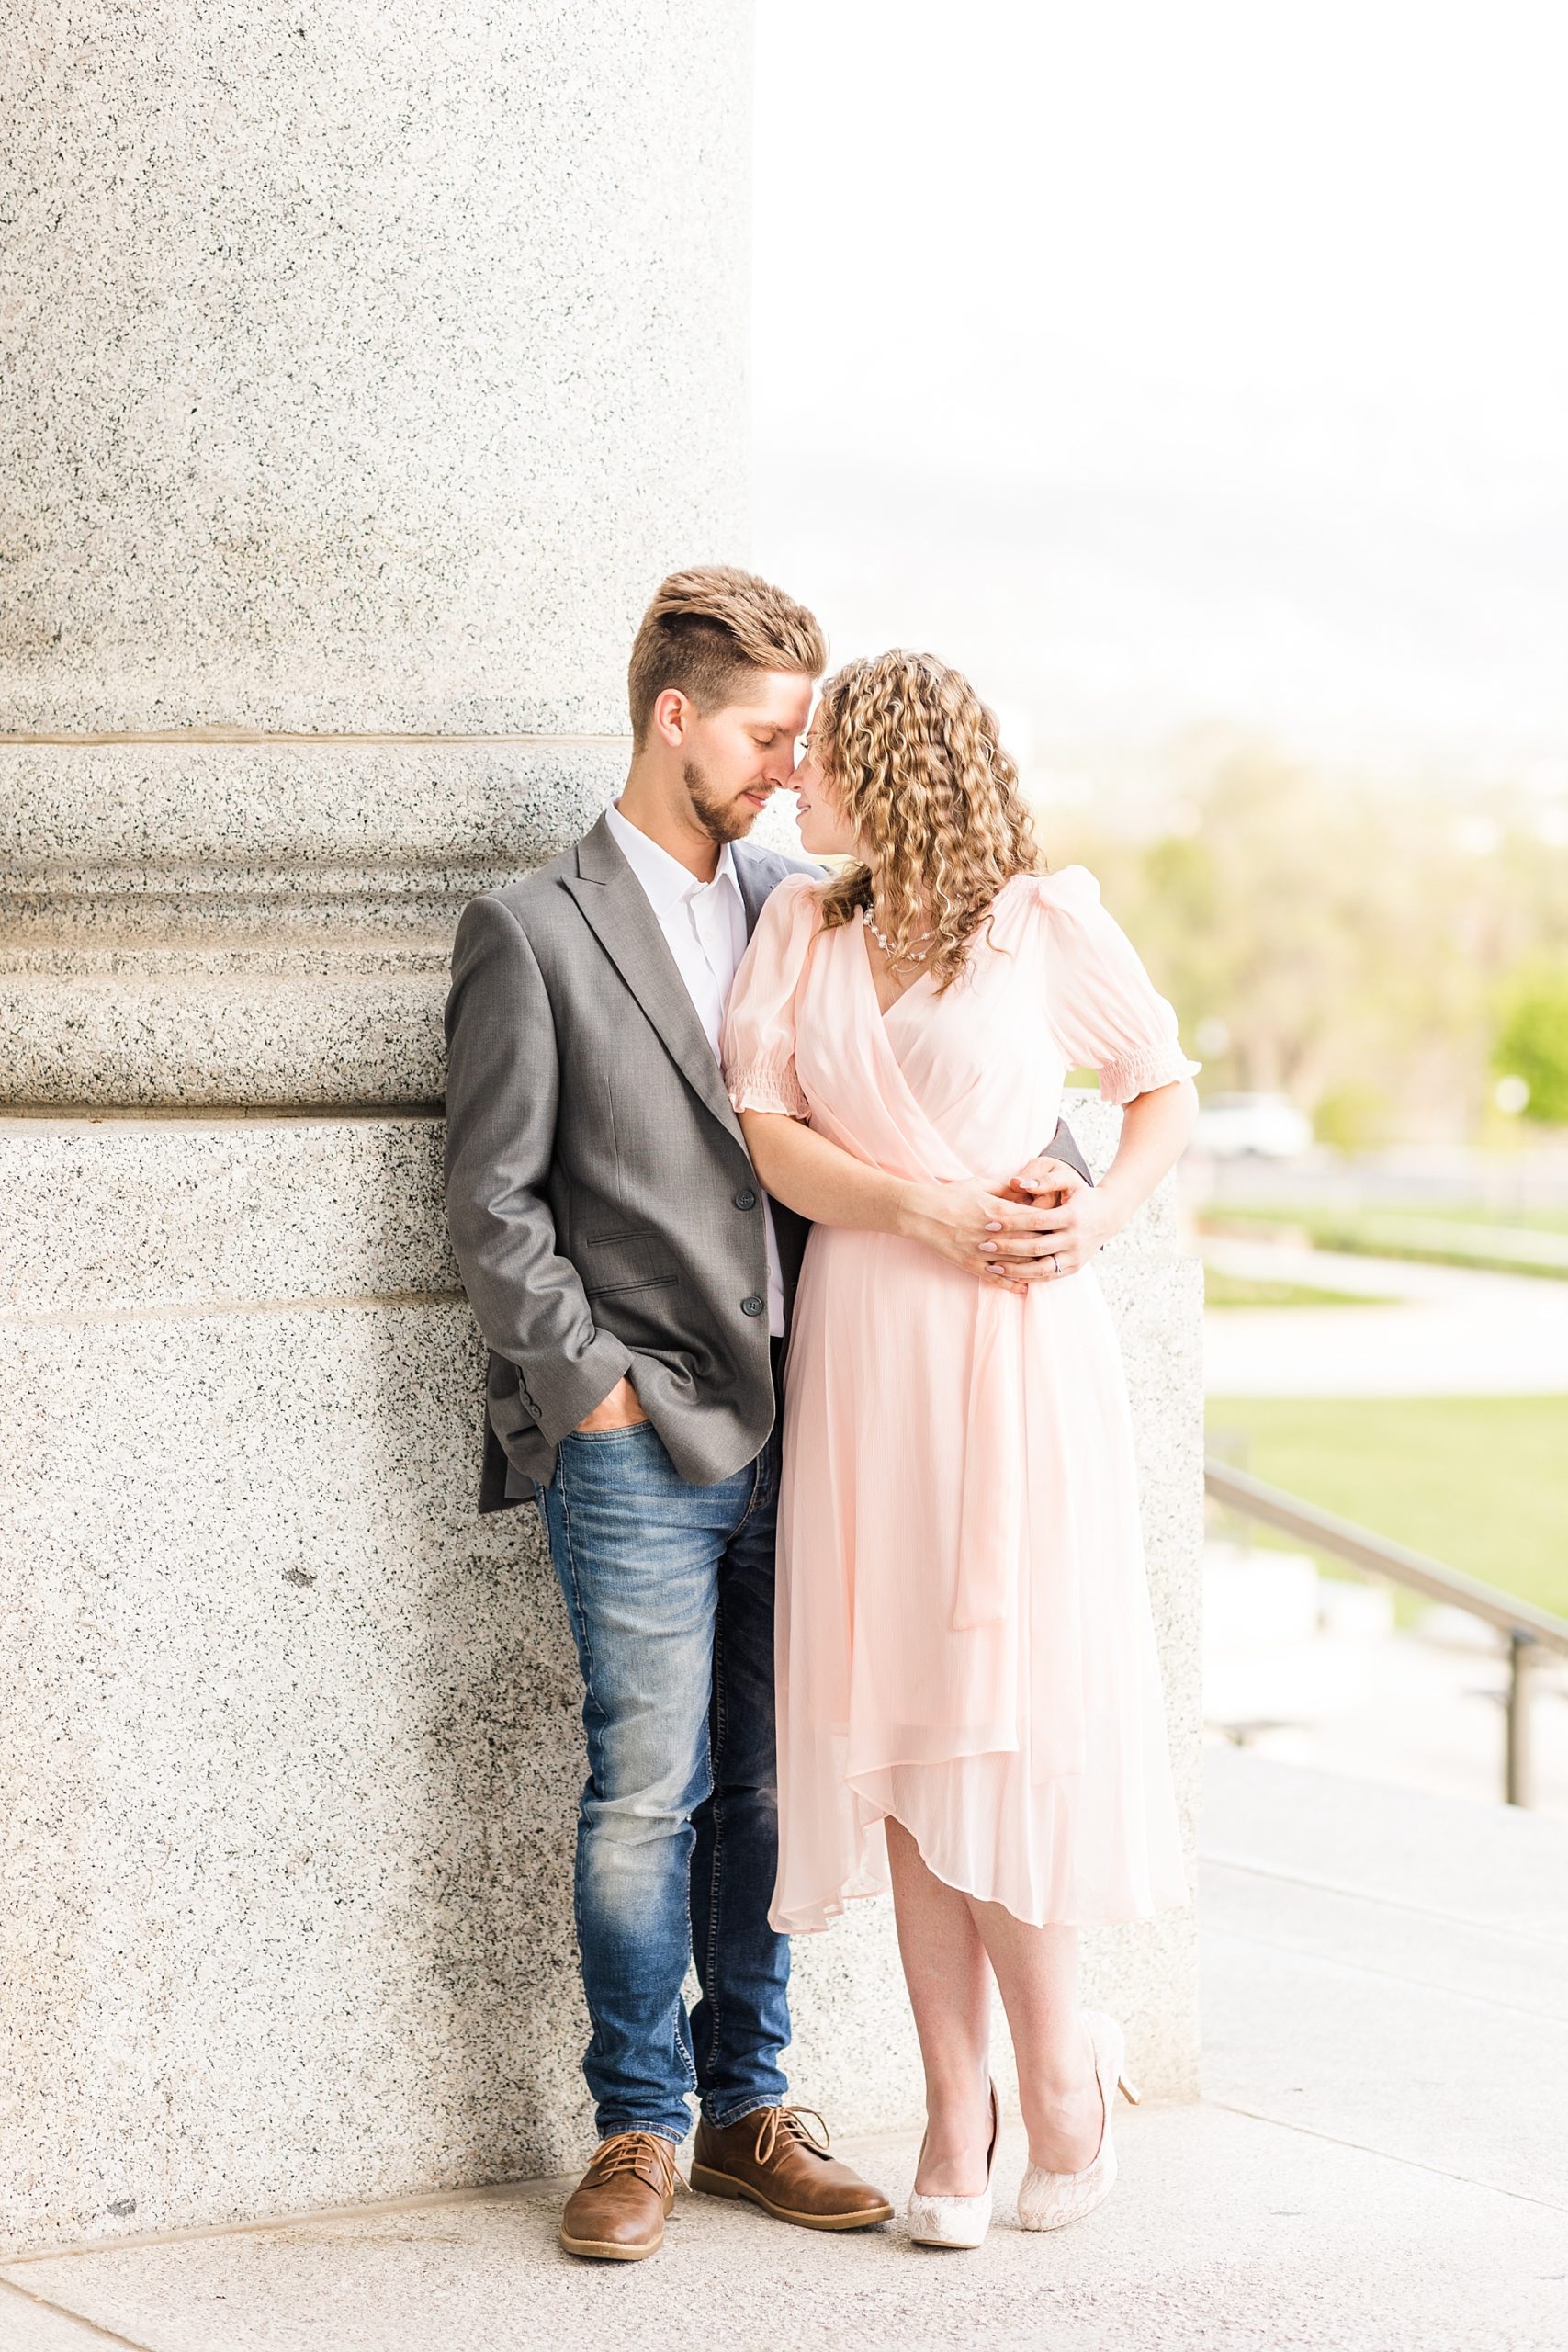 Elegant and romantic spring engagement session at the Utah State Capitol